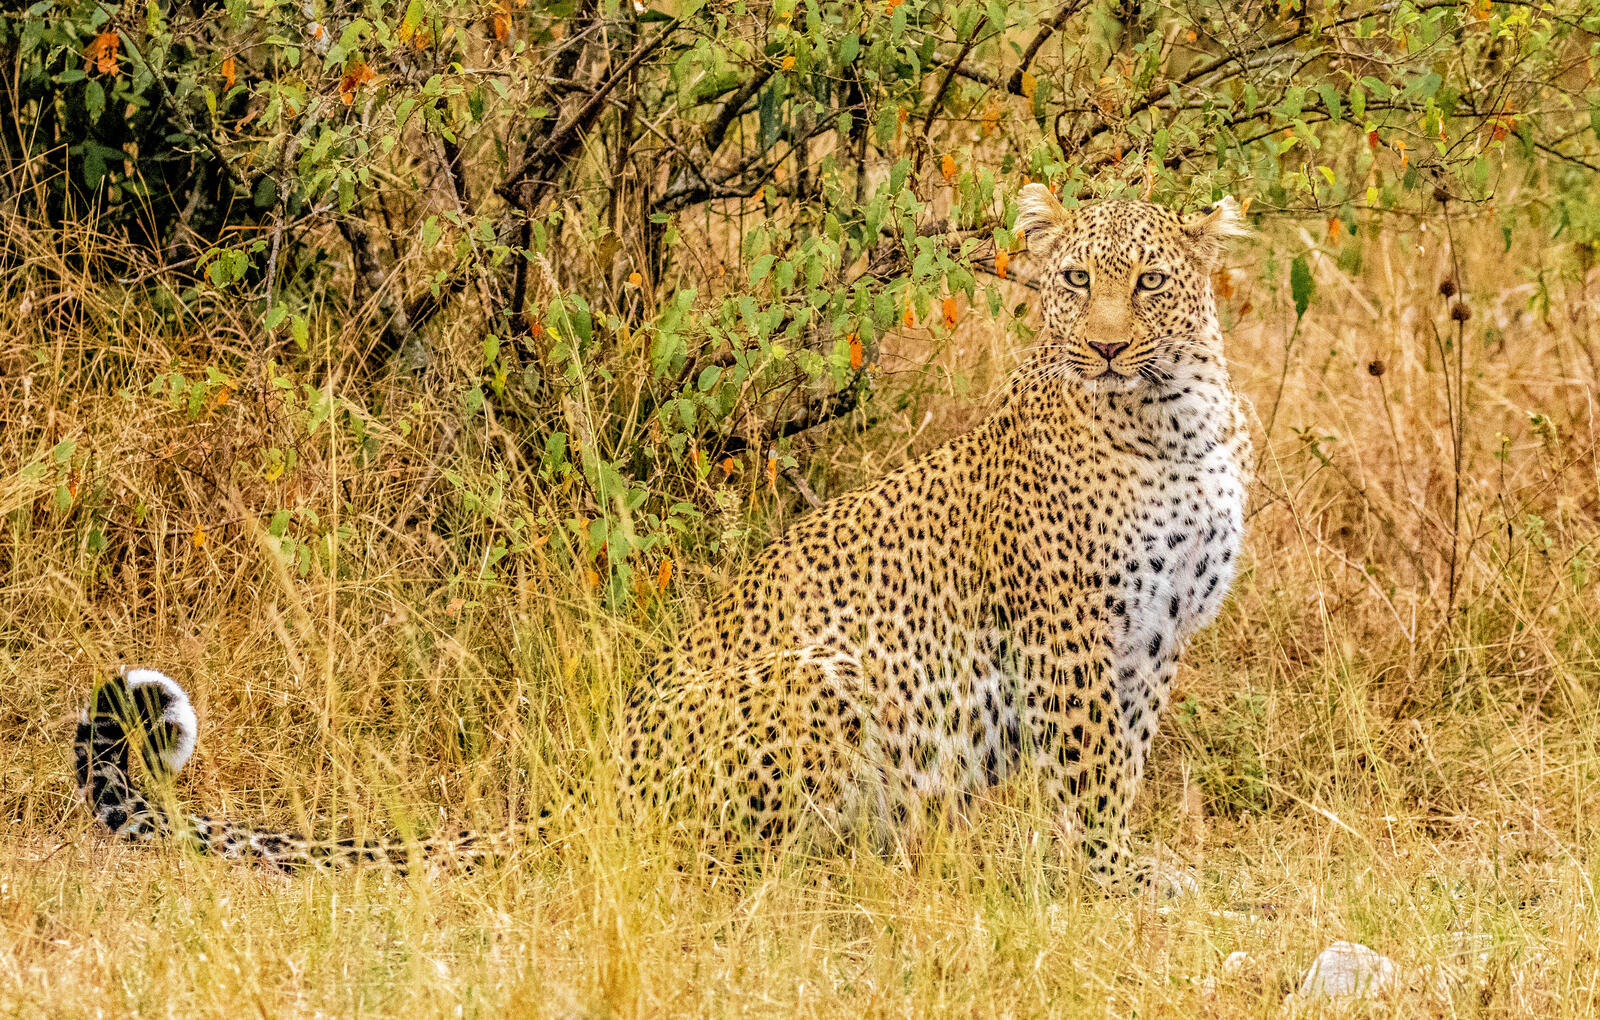 Wallpapers leopard Maasai Mara Kenya on the desktop